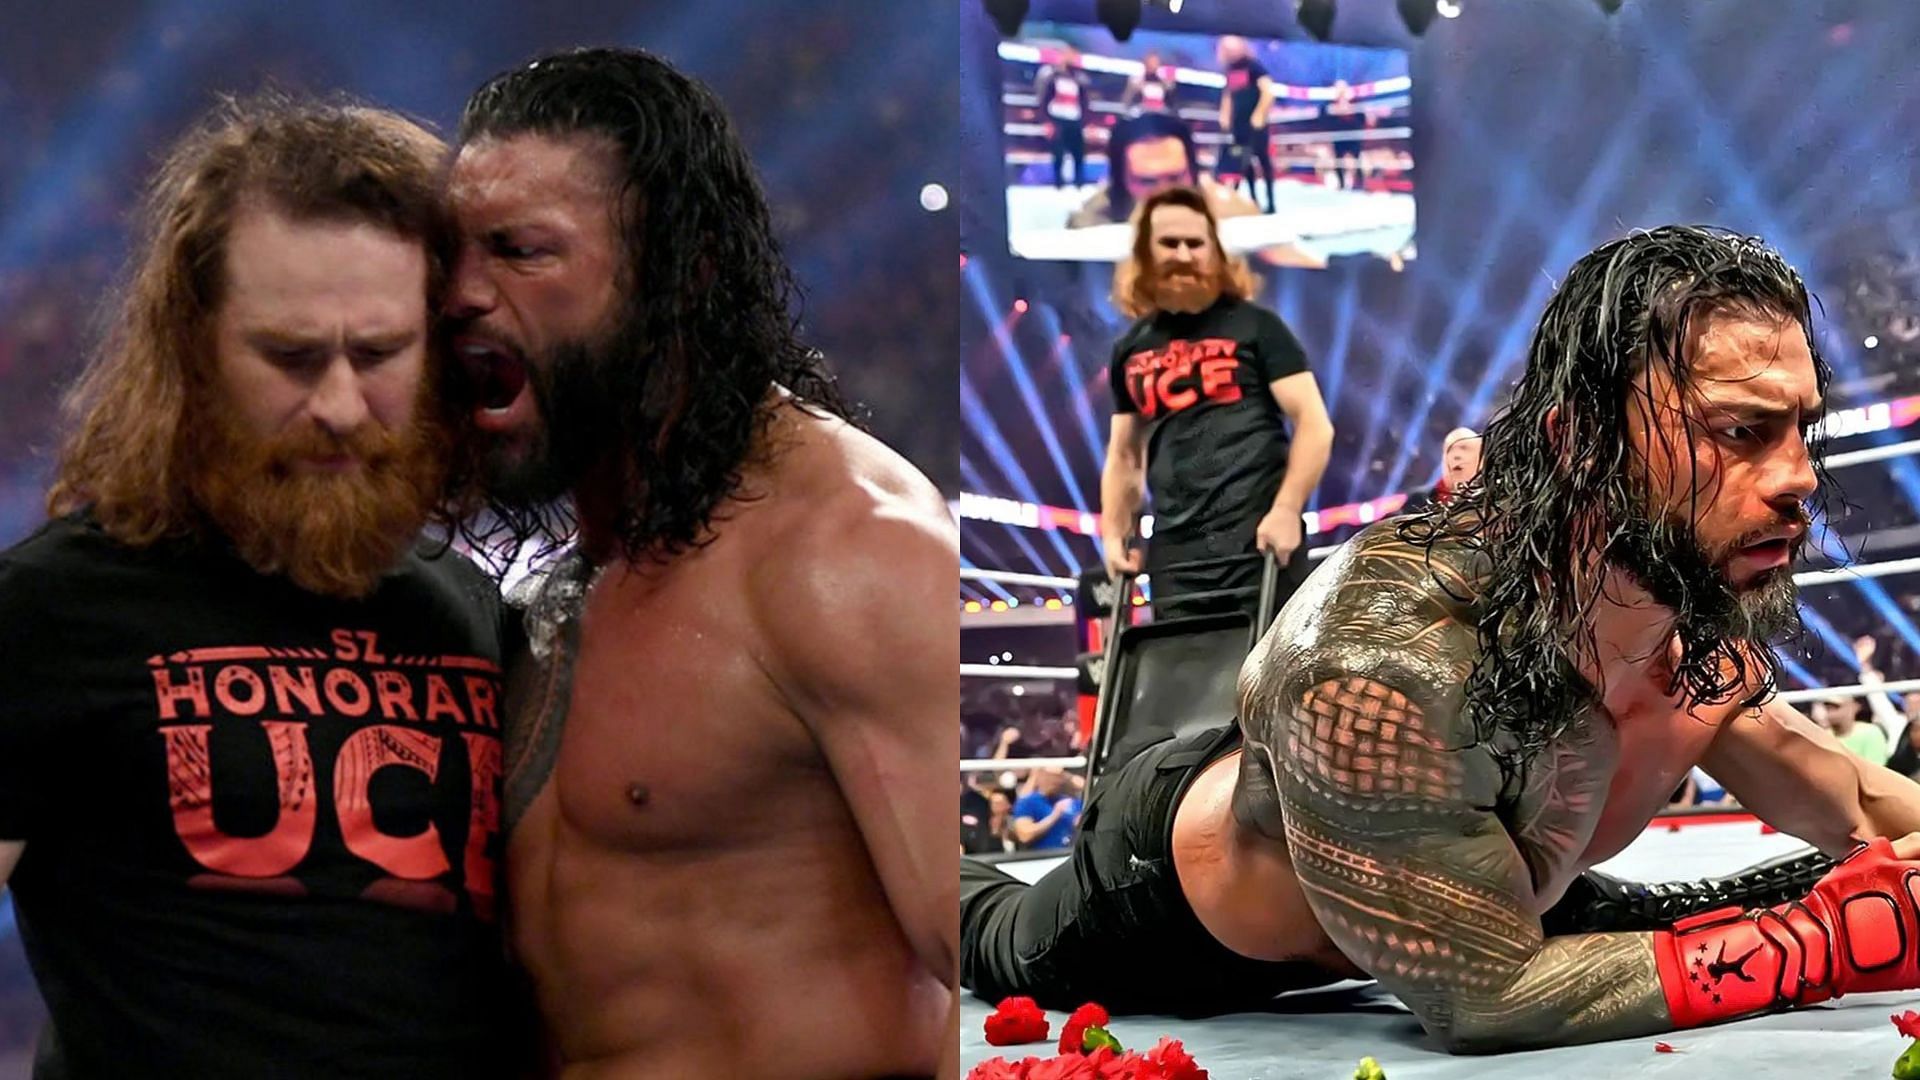 Sami Zayn turned on Roman Reigns at WWE Royal Rumble